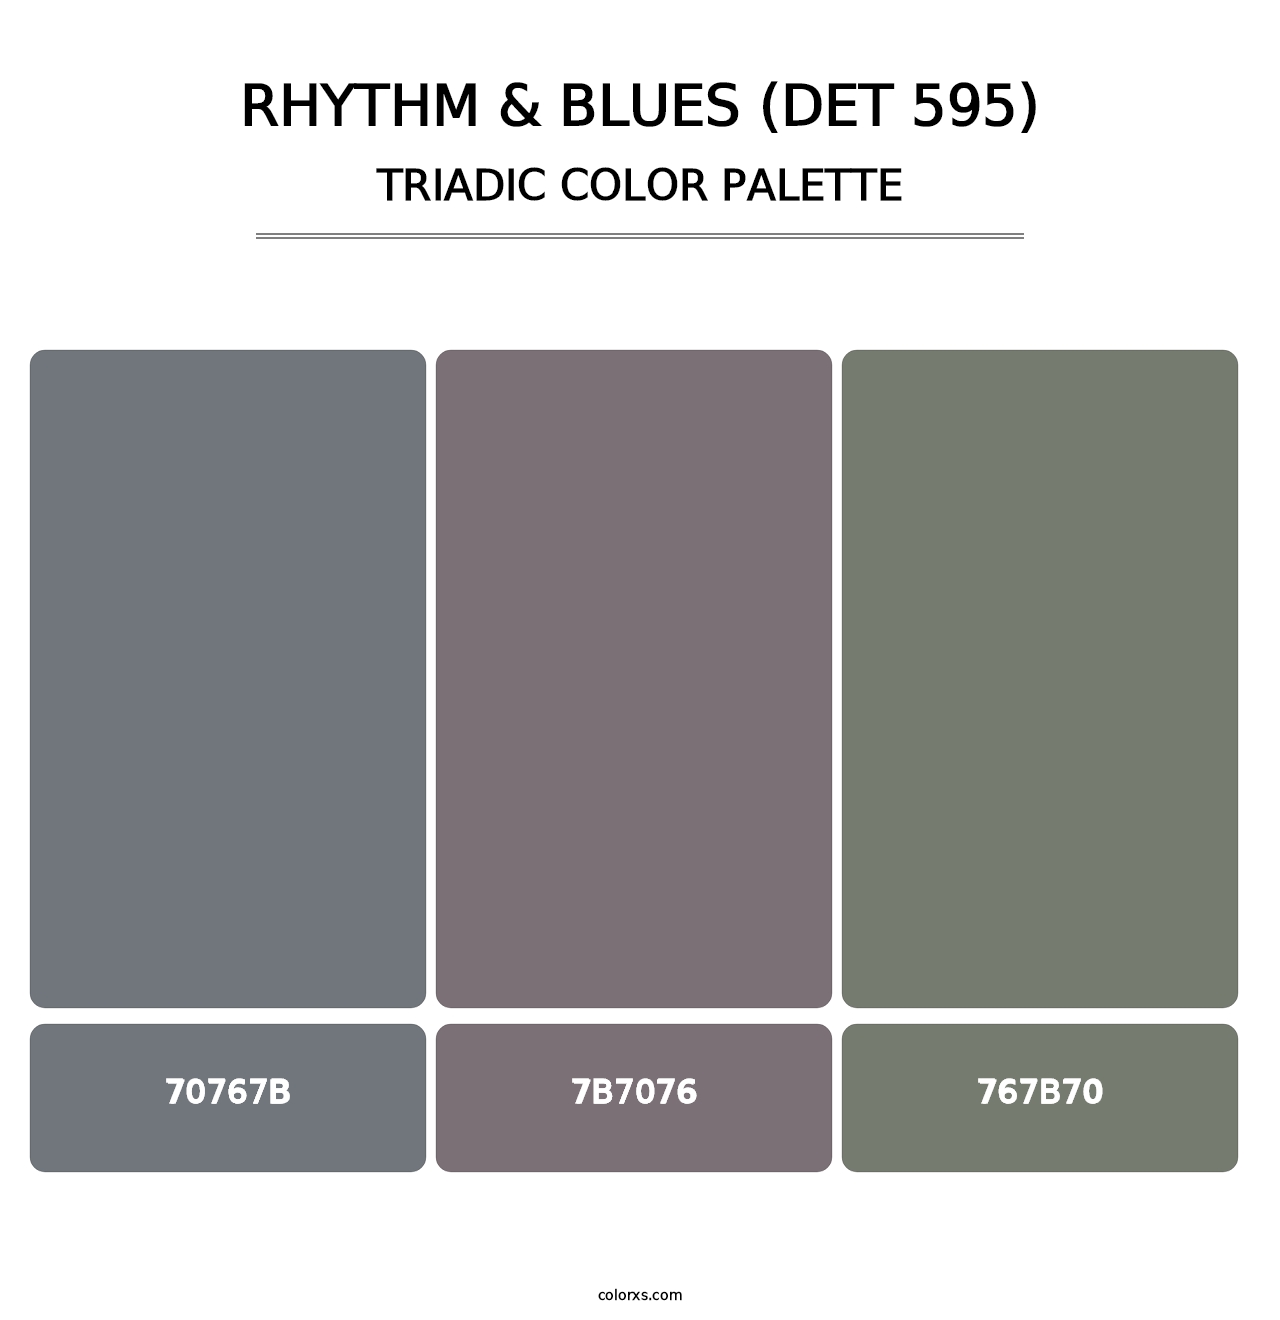 Rhythm & Blues (DET 595) - Triadic Color Palette